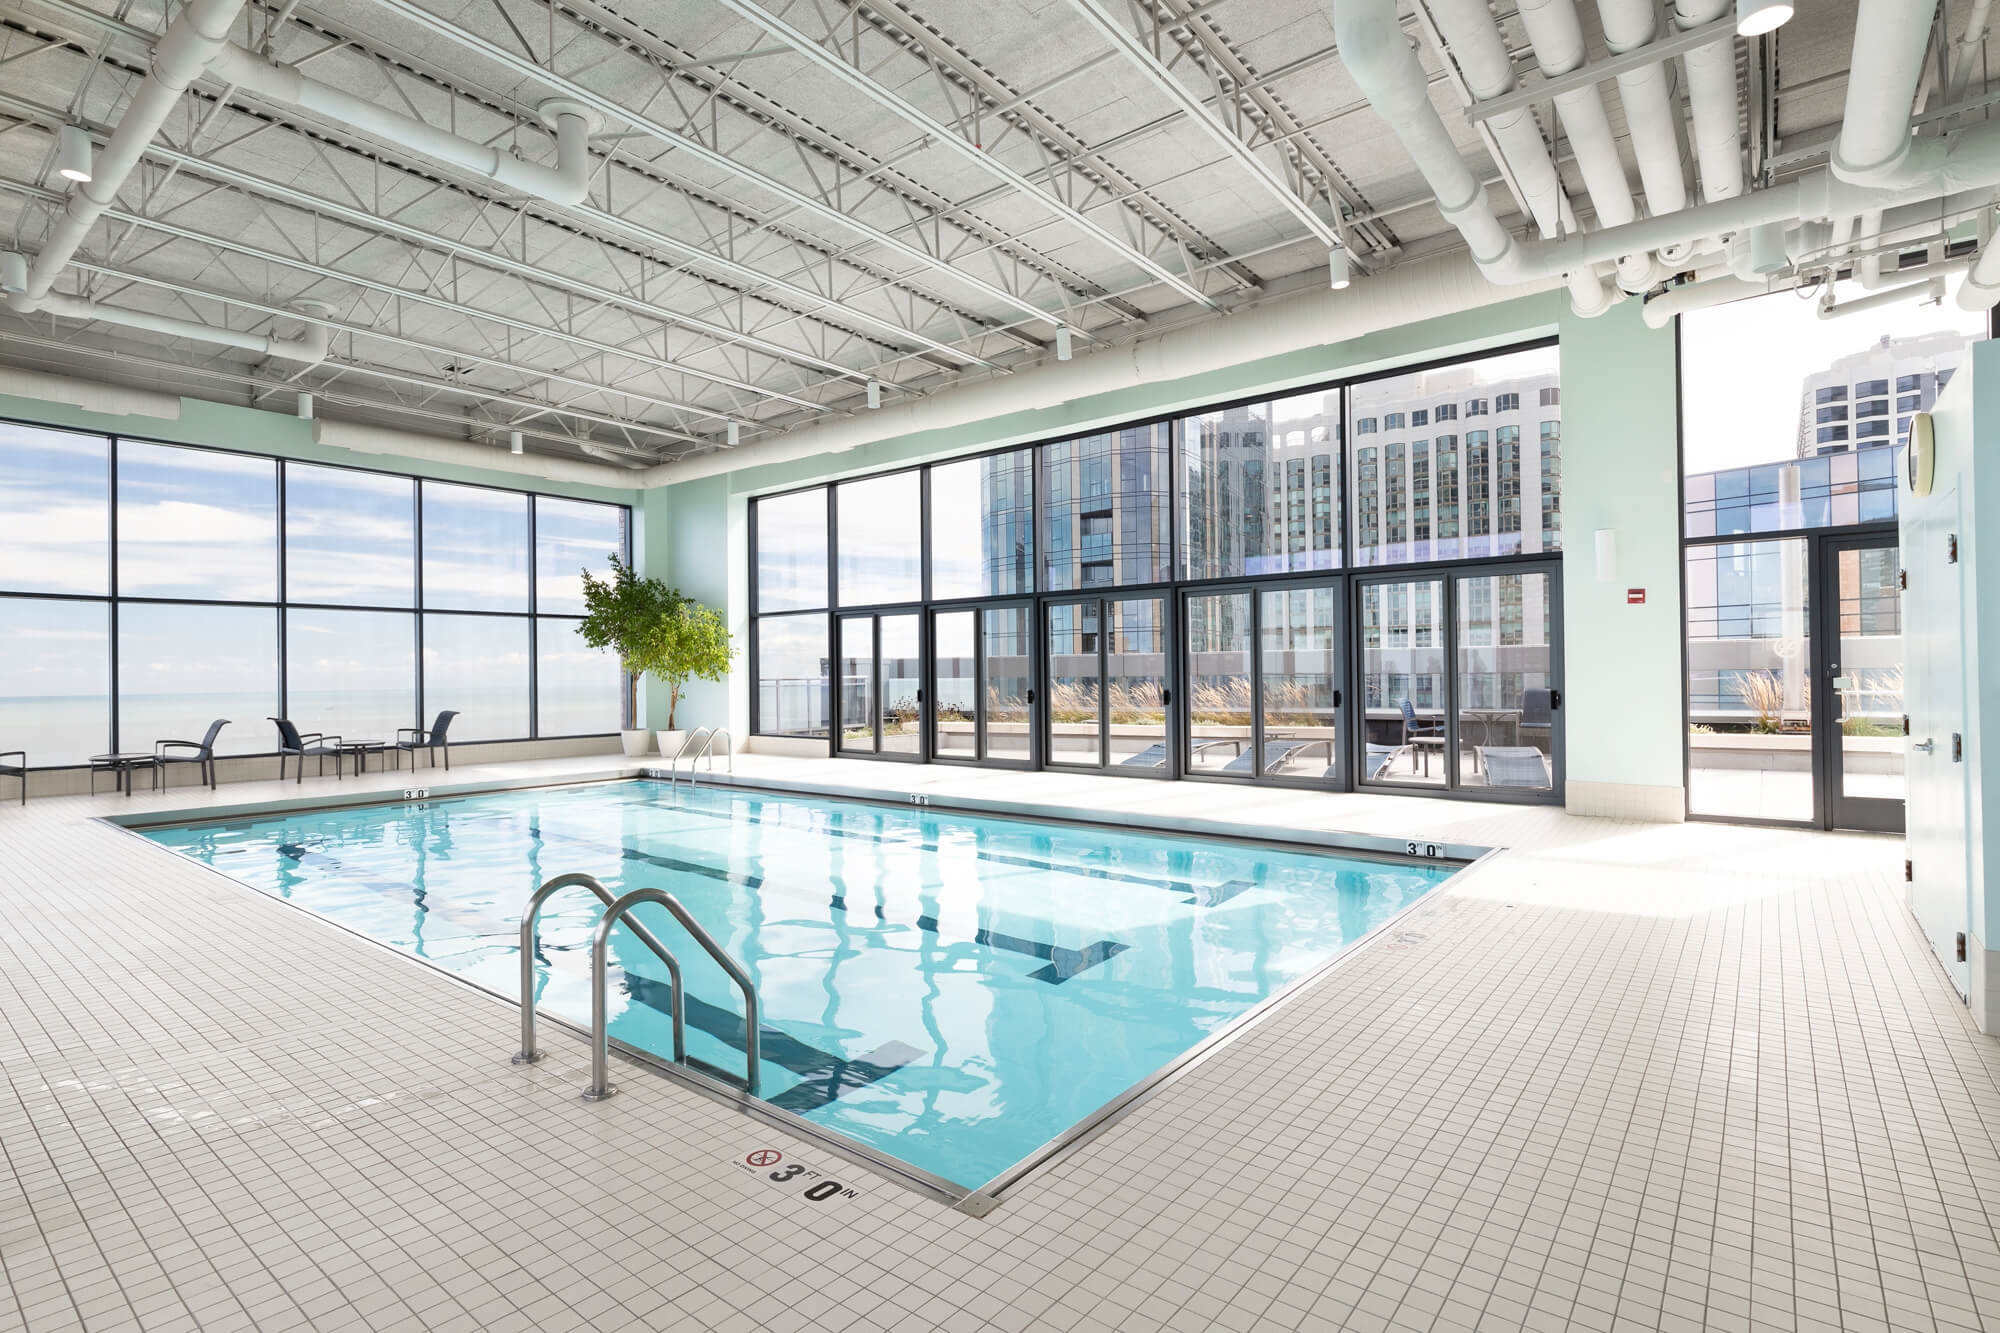 Calgary Condo Buildings With Indoor Swimming Pool